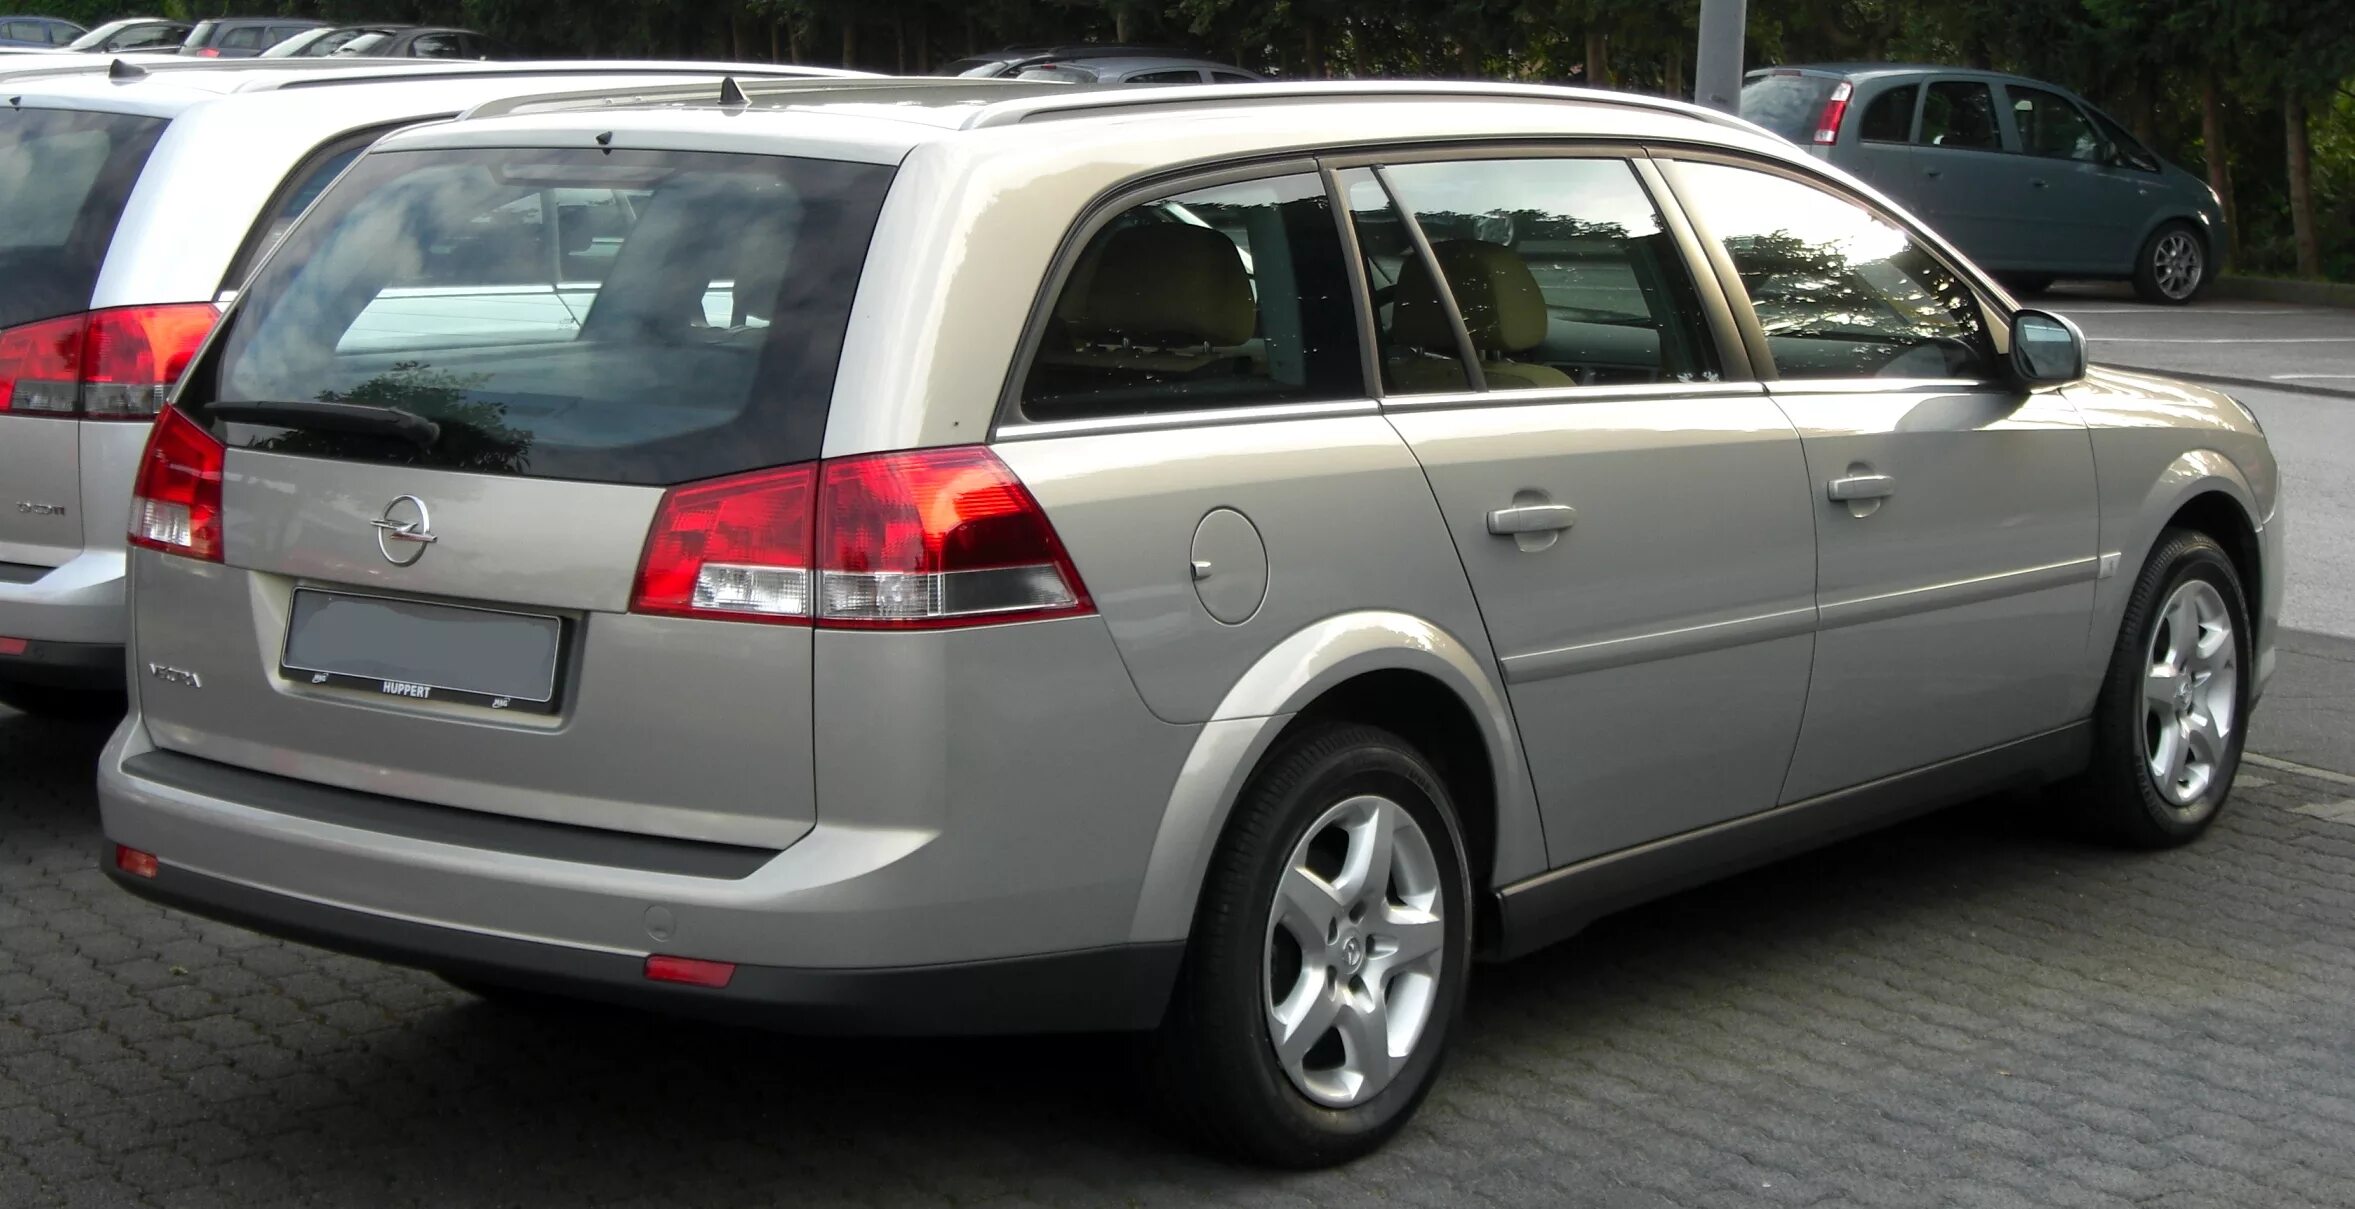 Opel Vectra c 2008 универсал. Опель Вектра Караван 2008. Опель Вектра универсал 2008. Opel Vectra c Caravan.